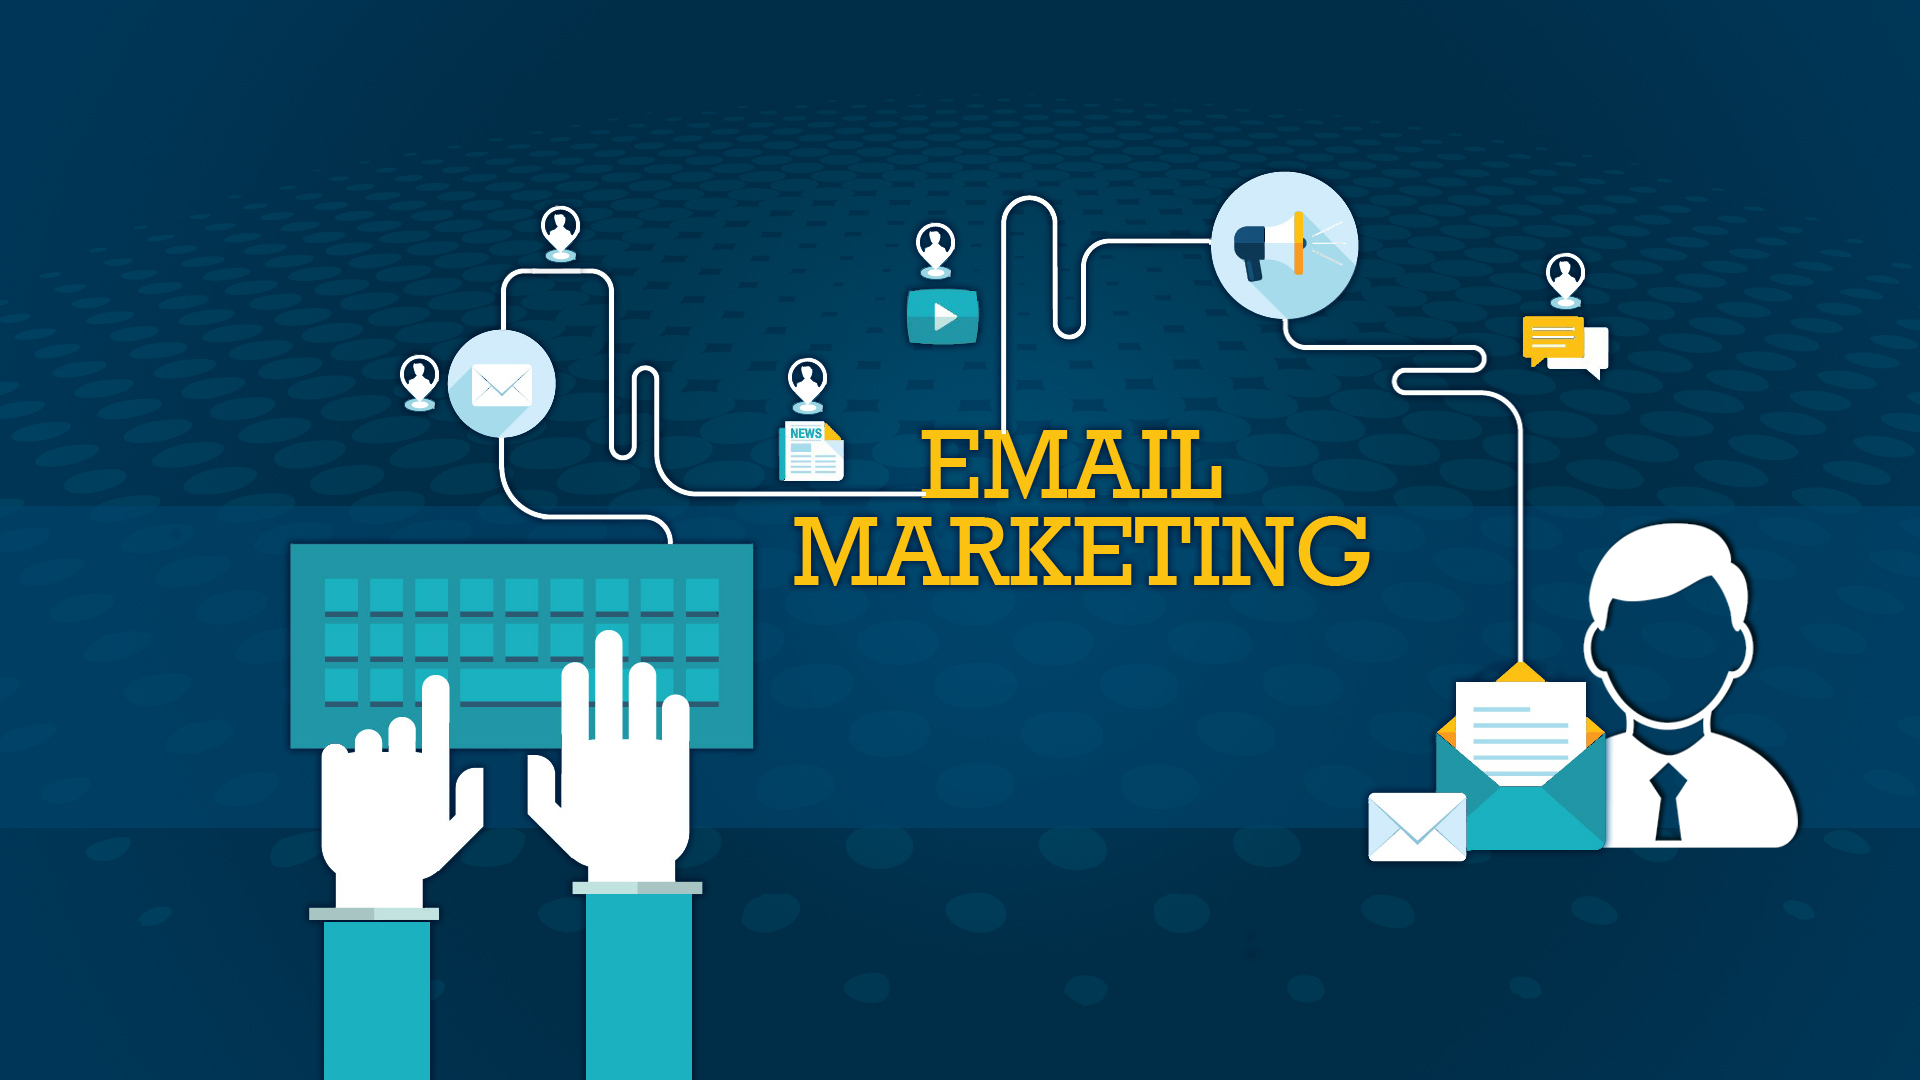 Khái niệm Email Marketing